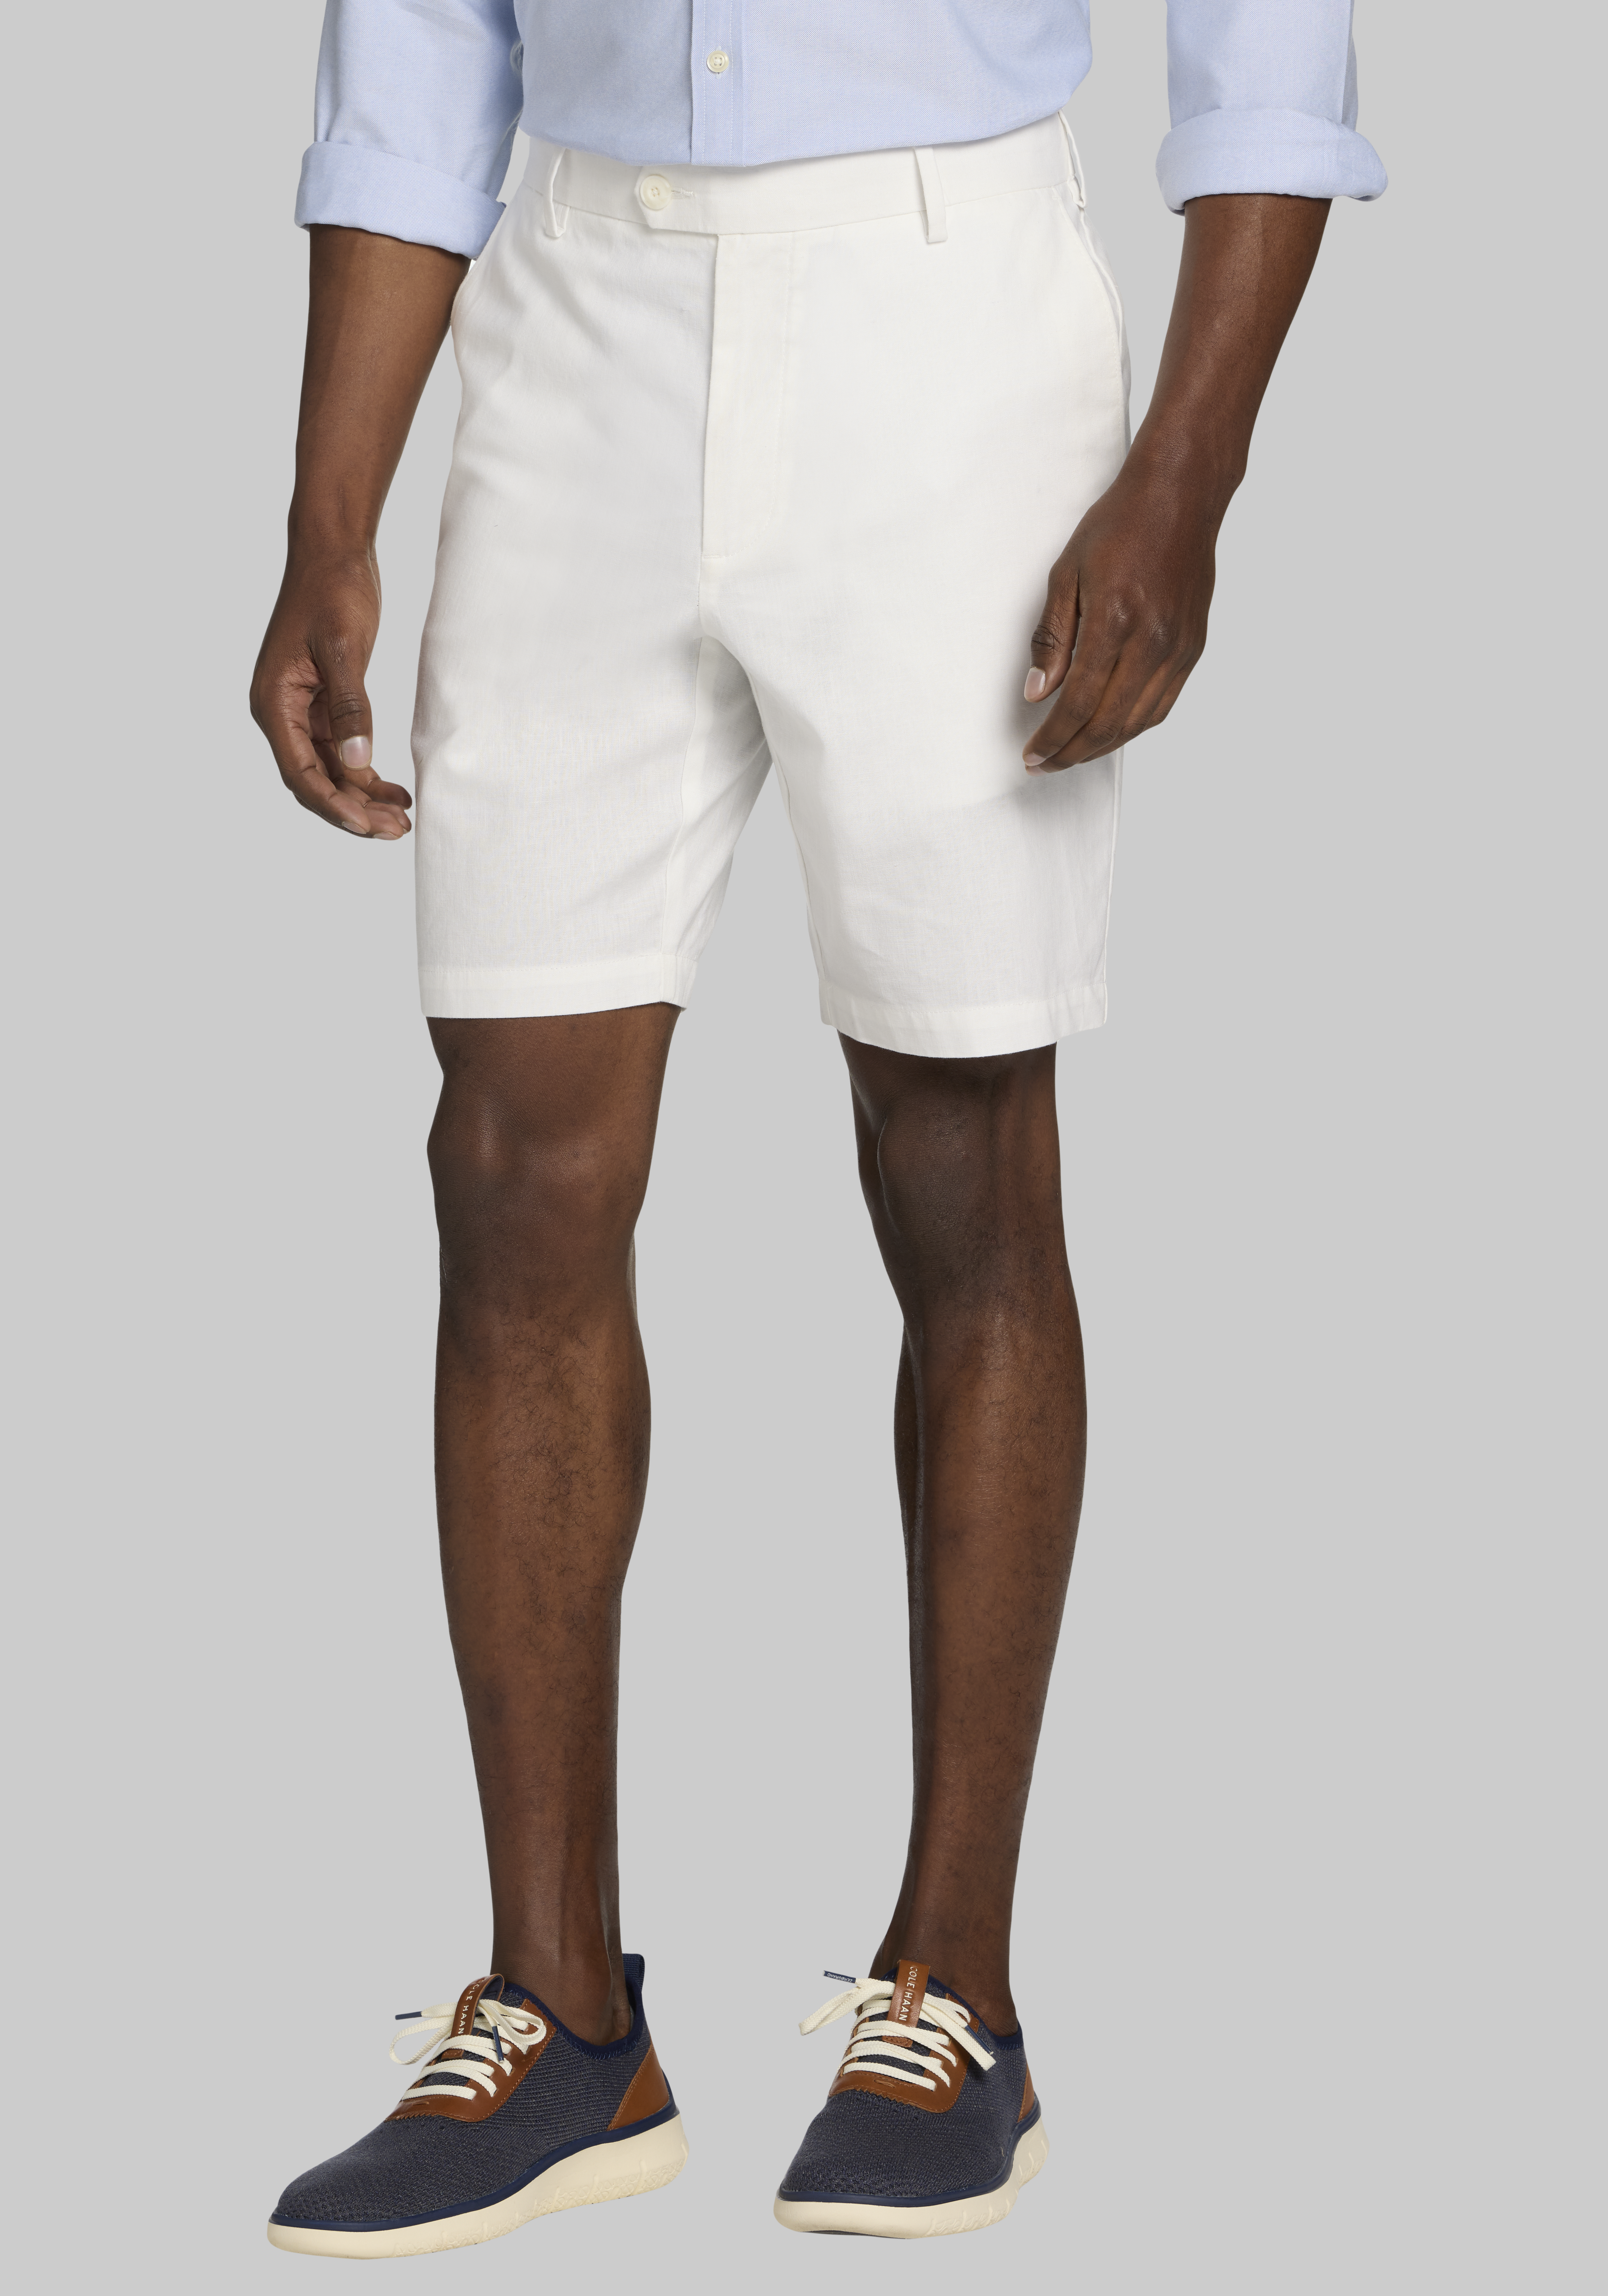 Men's Shorts | Seersucker, Pleated & Linen Shorts | JoS. A. Bank